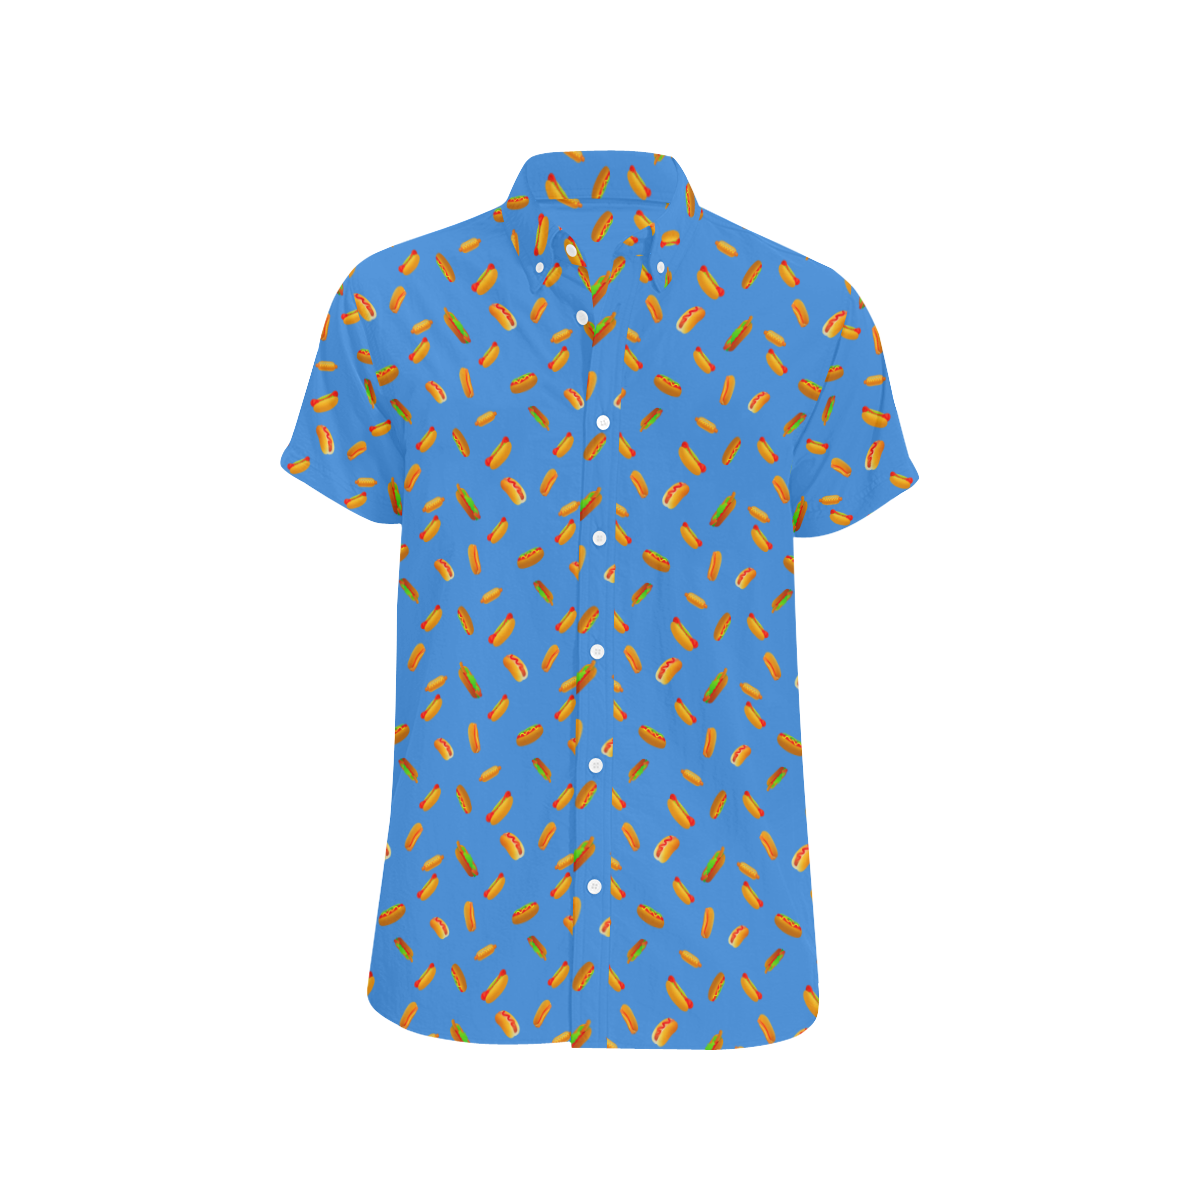 Hot Dog Pattern Men's All Over Print Short Sleeve Shirt (Model T53)